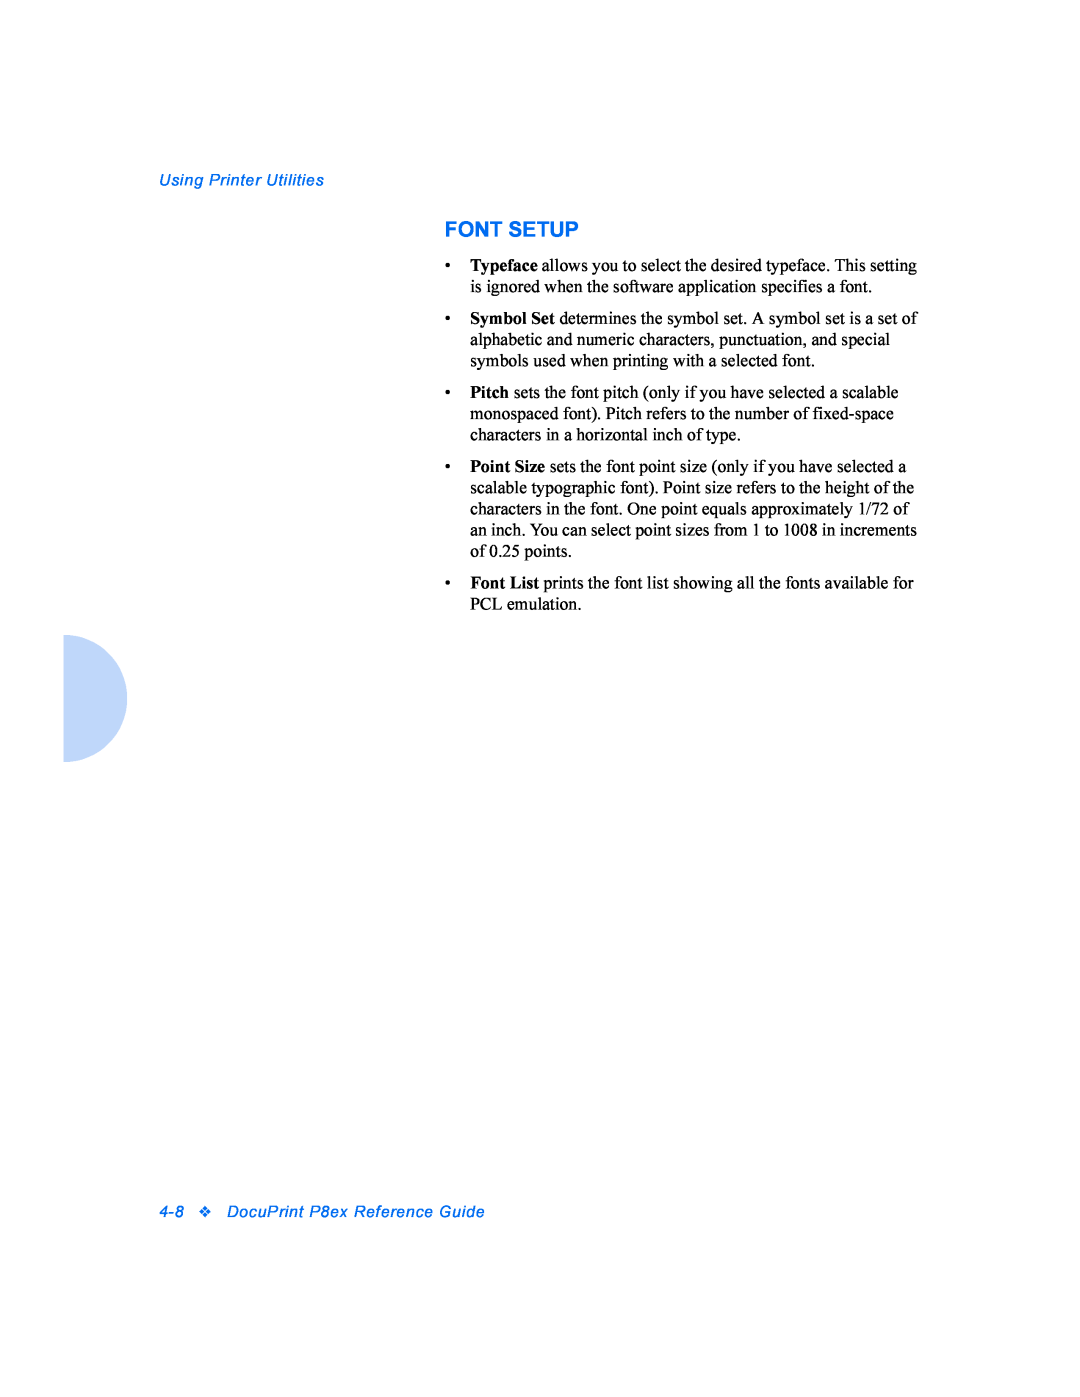 Xerox manual Font Setup, Using Printer Utilities, 4-8DocuPrint P8ex Reference Guide 